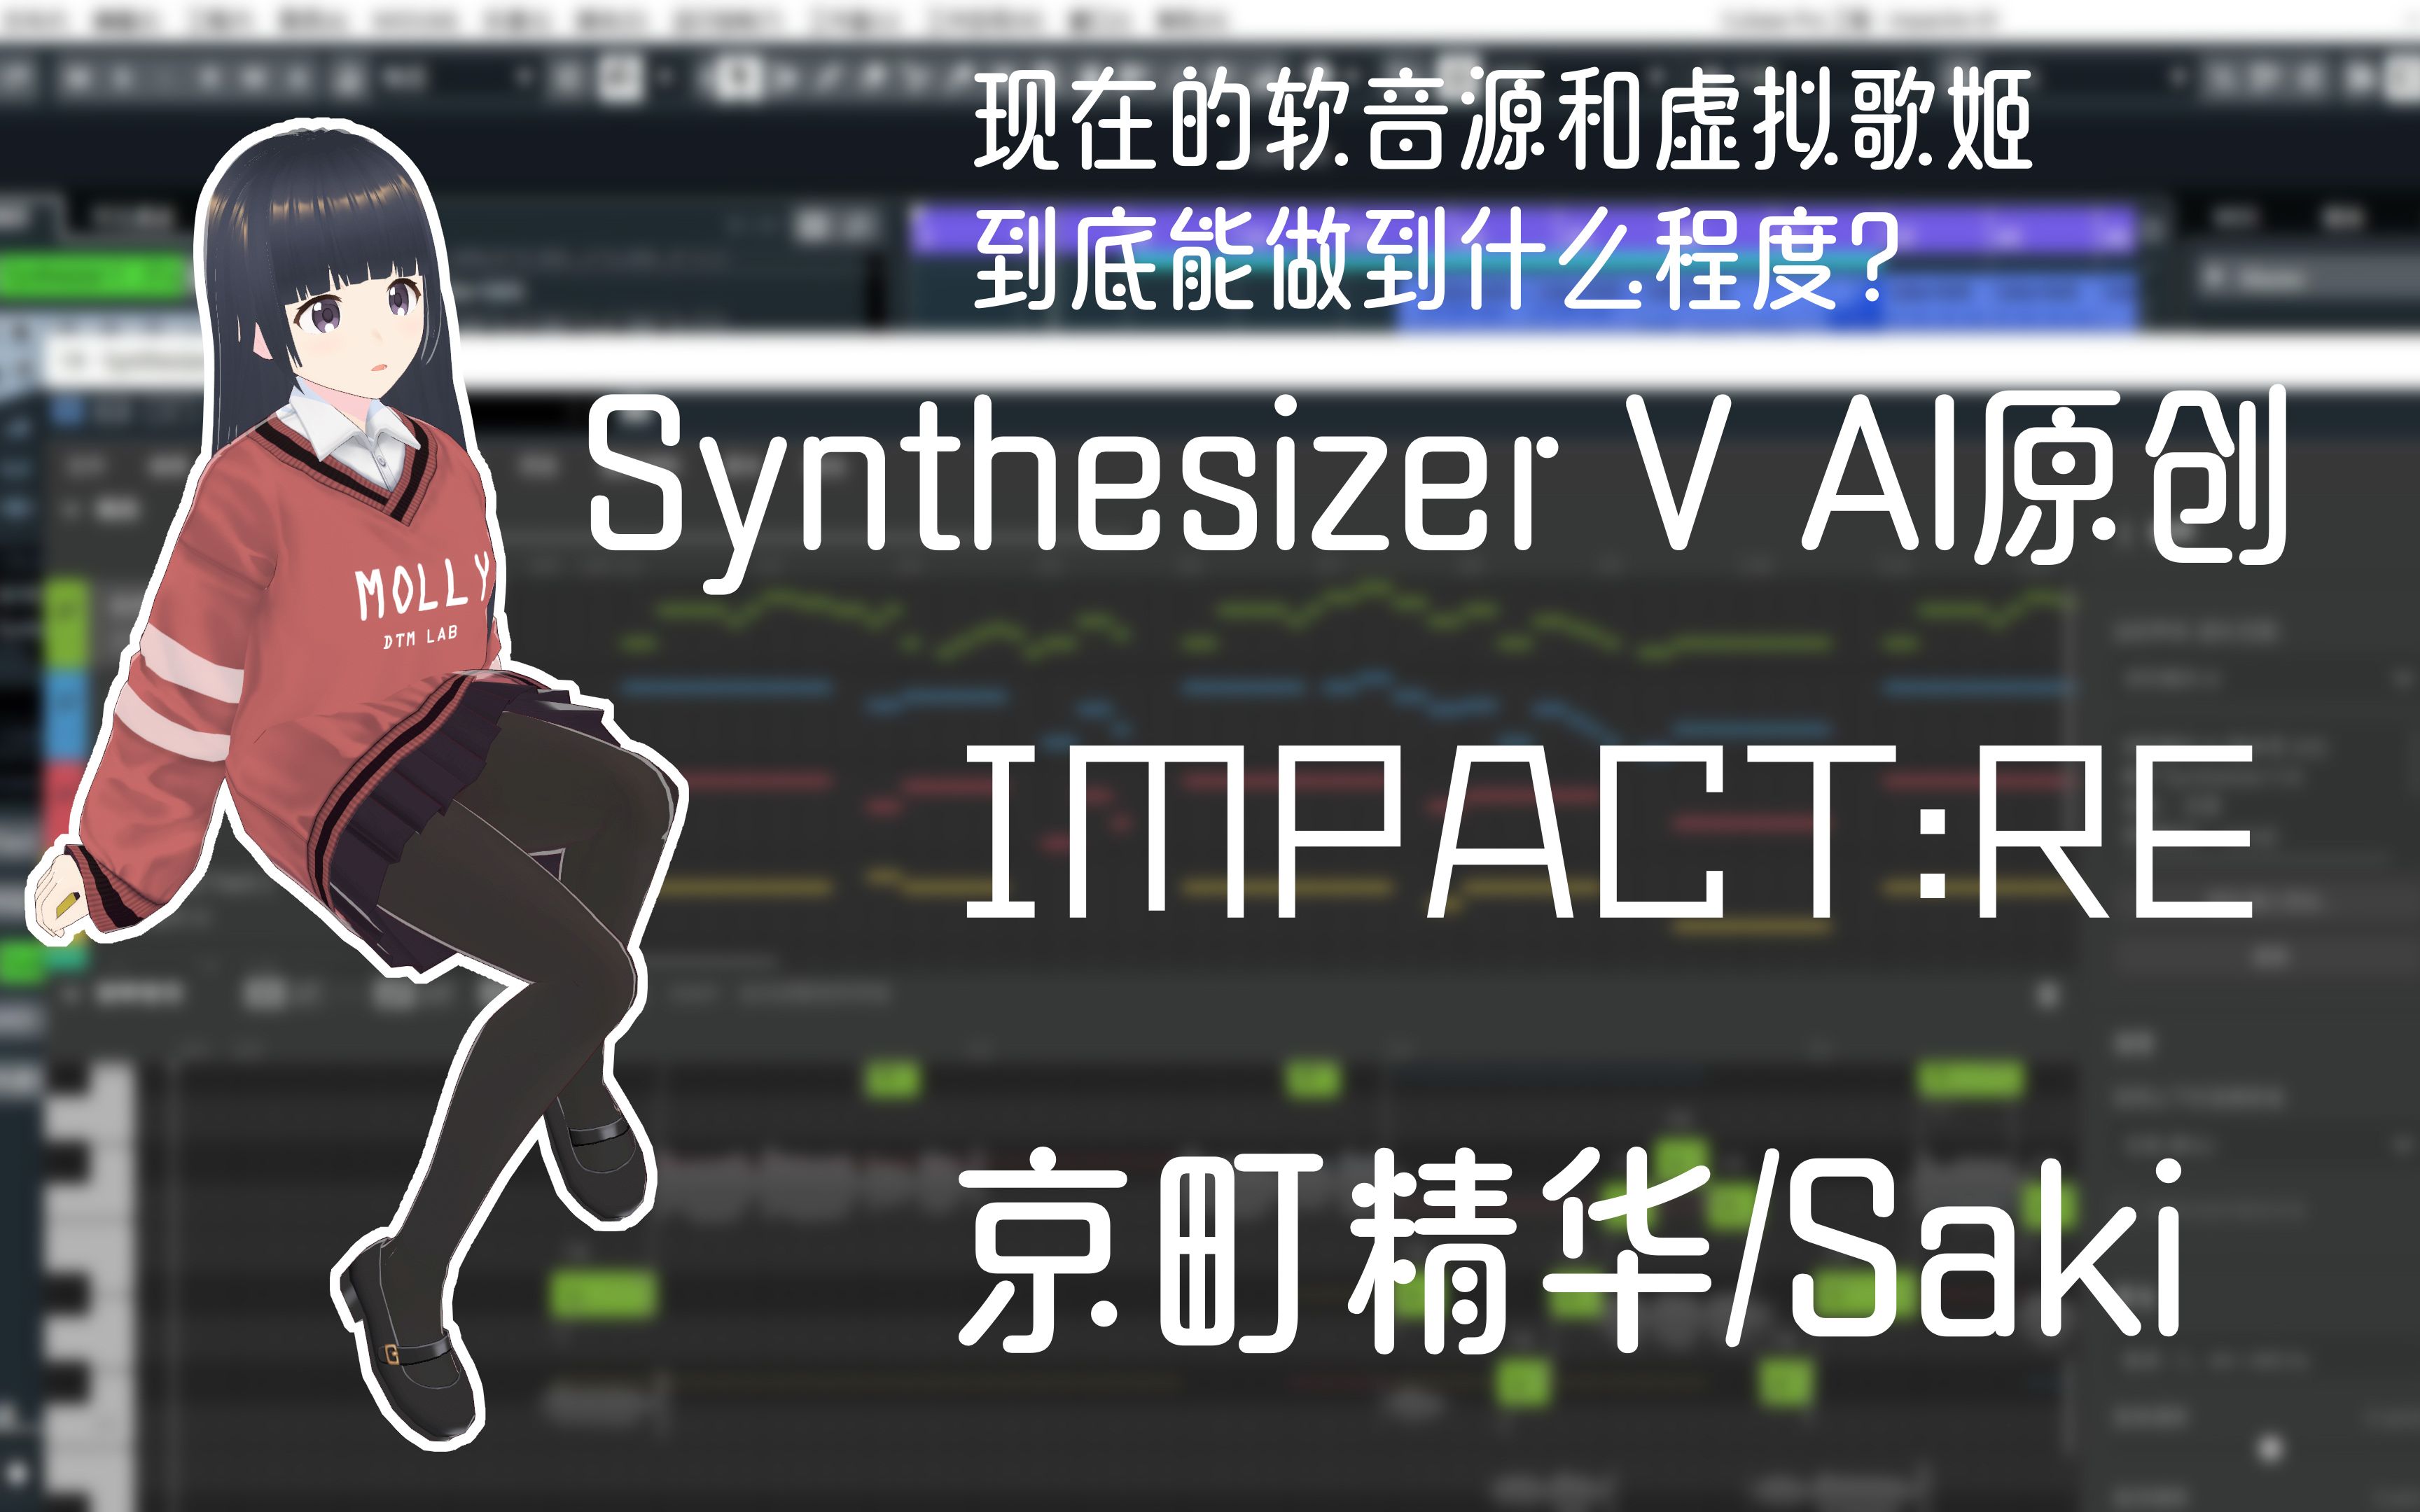 【Synthesizer V AI原创】时代真的变了…现在的软音源和虚拟歌姬到底能做到什么程度？-Impact RE 【京町精华/saki】【日式管弦摇滚】